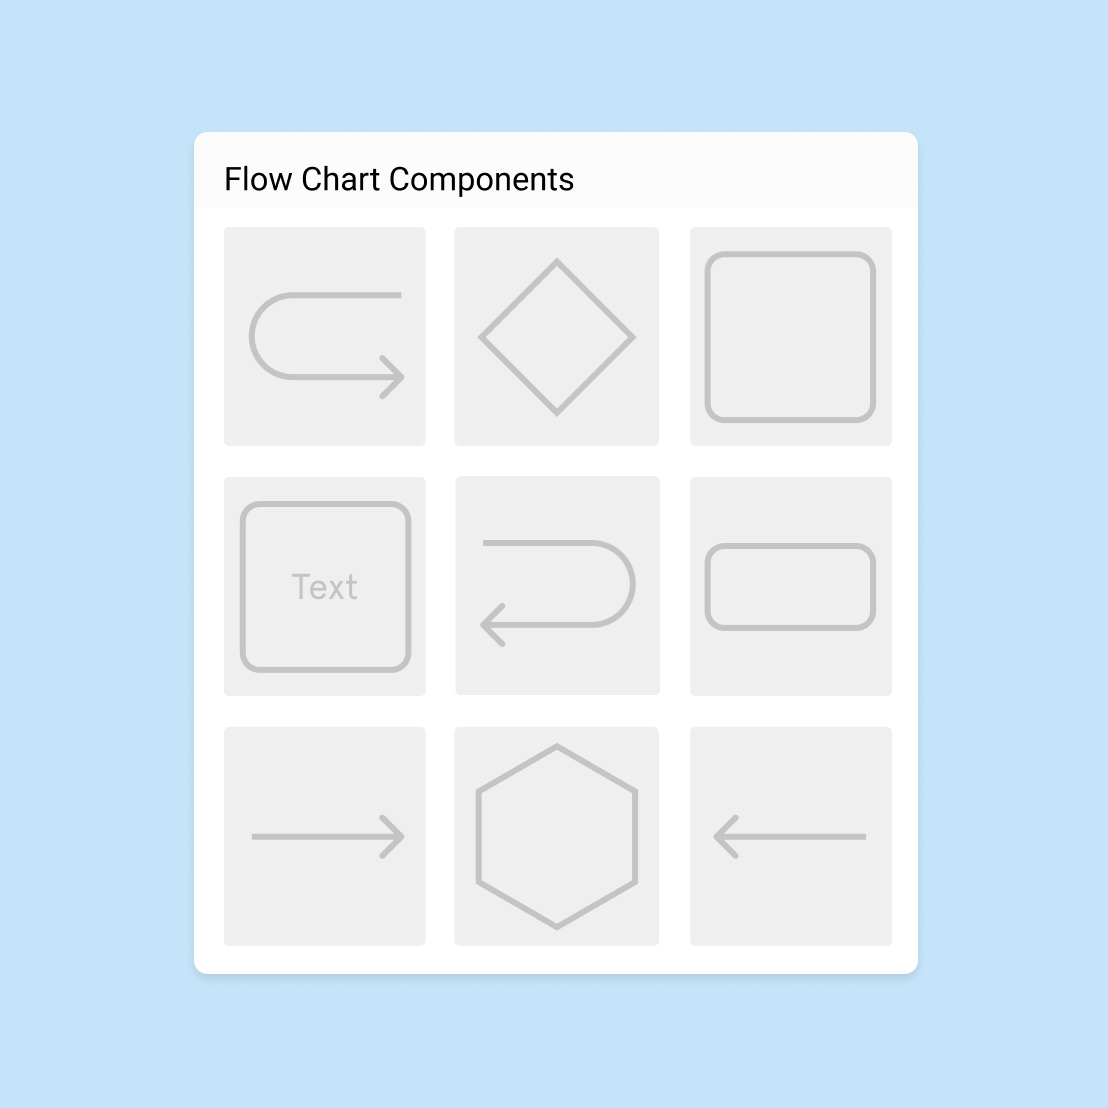 Flow Diagram Template 006 Online Flow Chart Template Group 2 20 1 Breathtaking Ideas